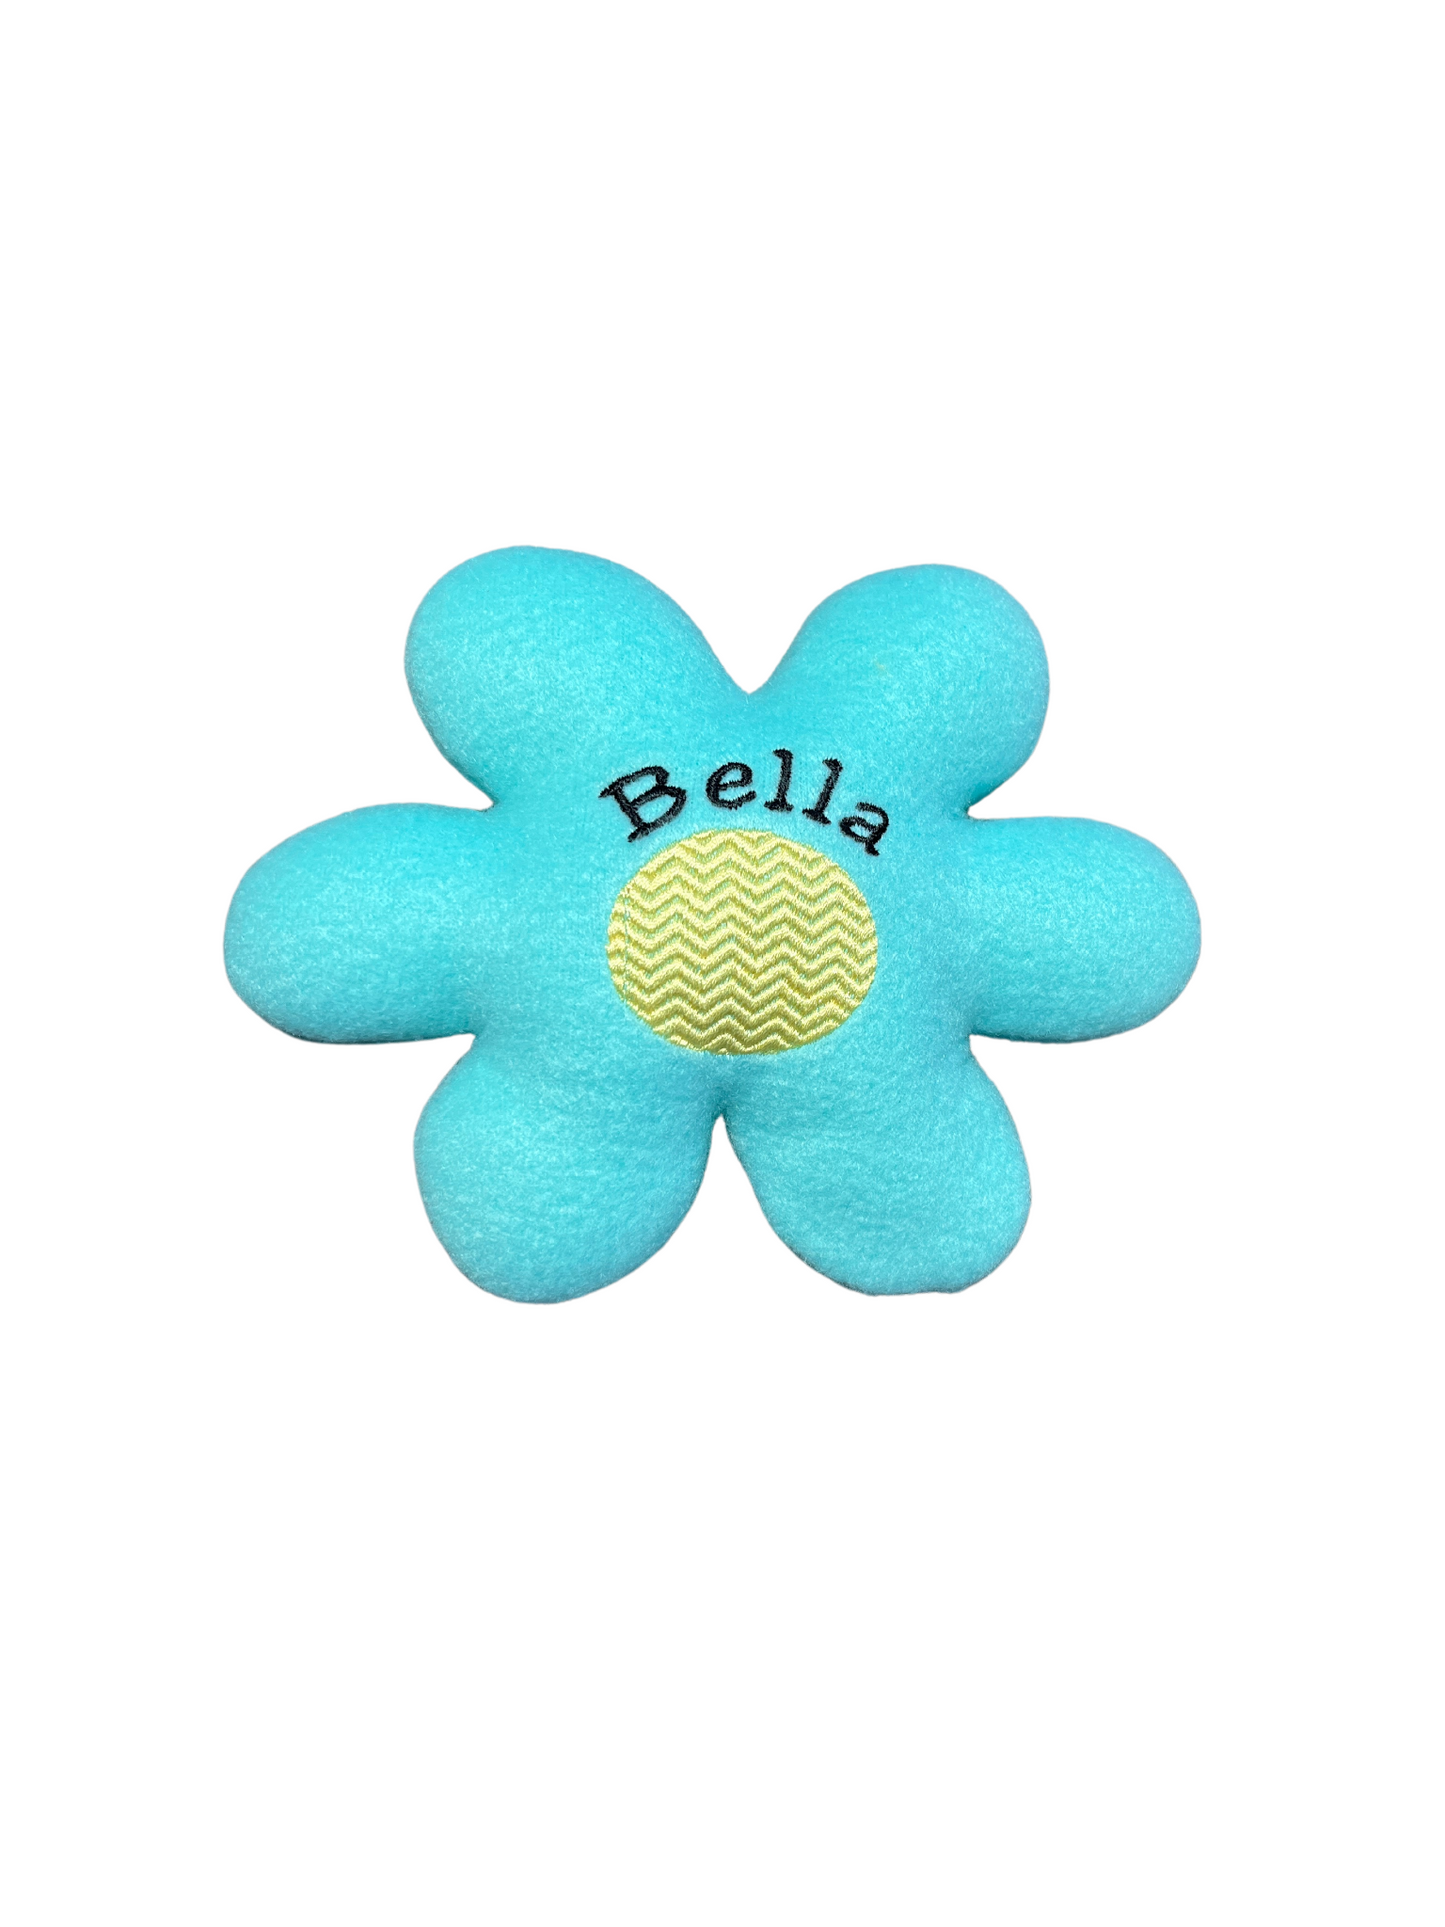 Retro Daisy Custom Dog Toy- Personalized Squeaky Flower Toy Dog Toys   